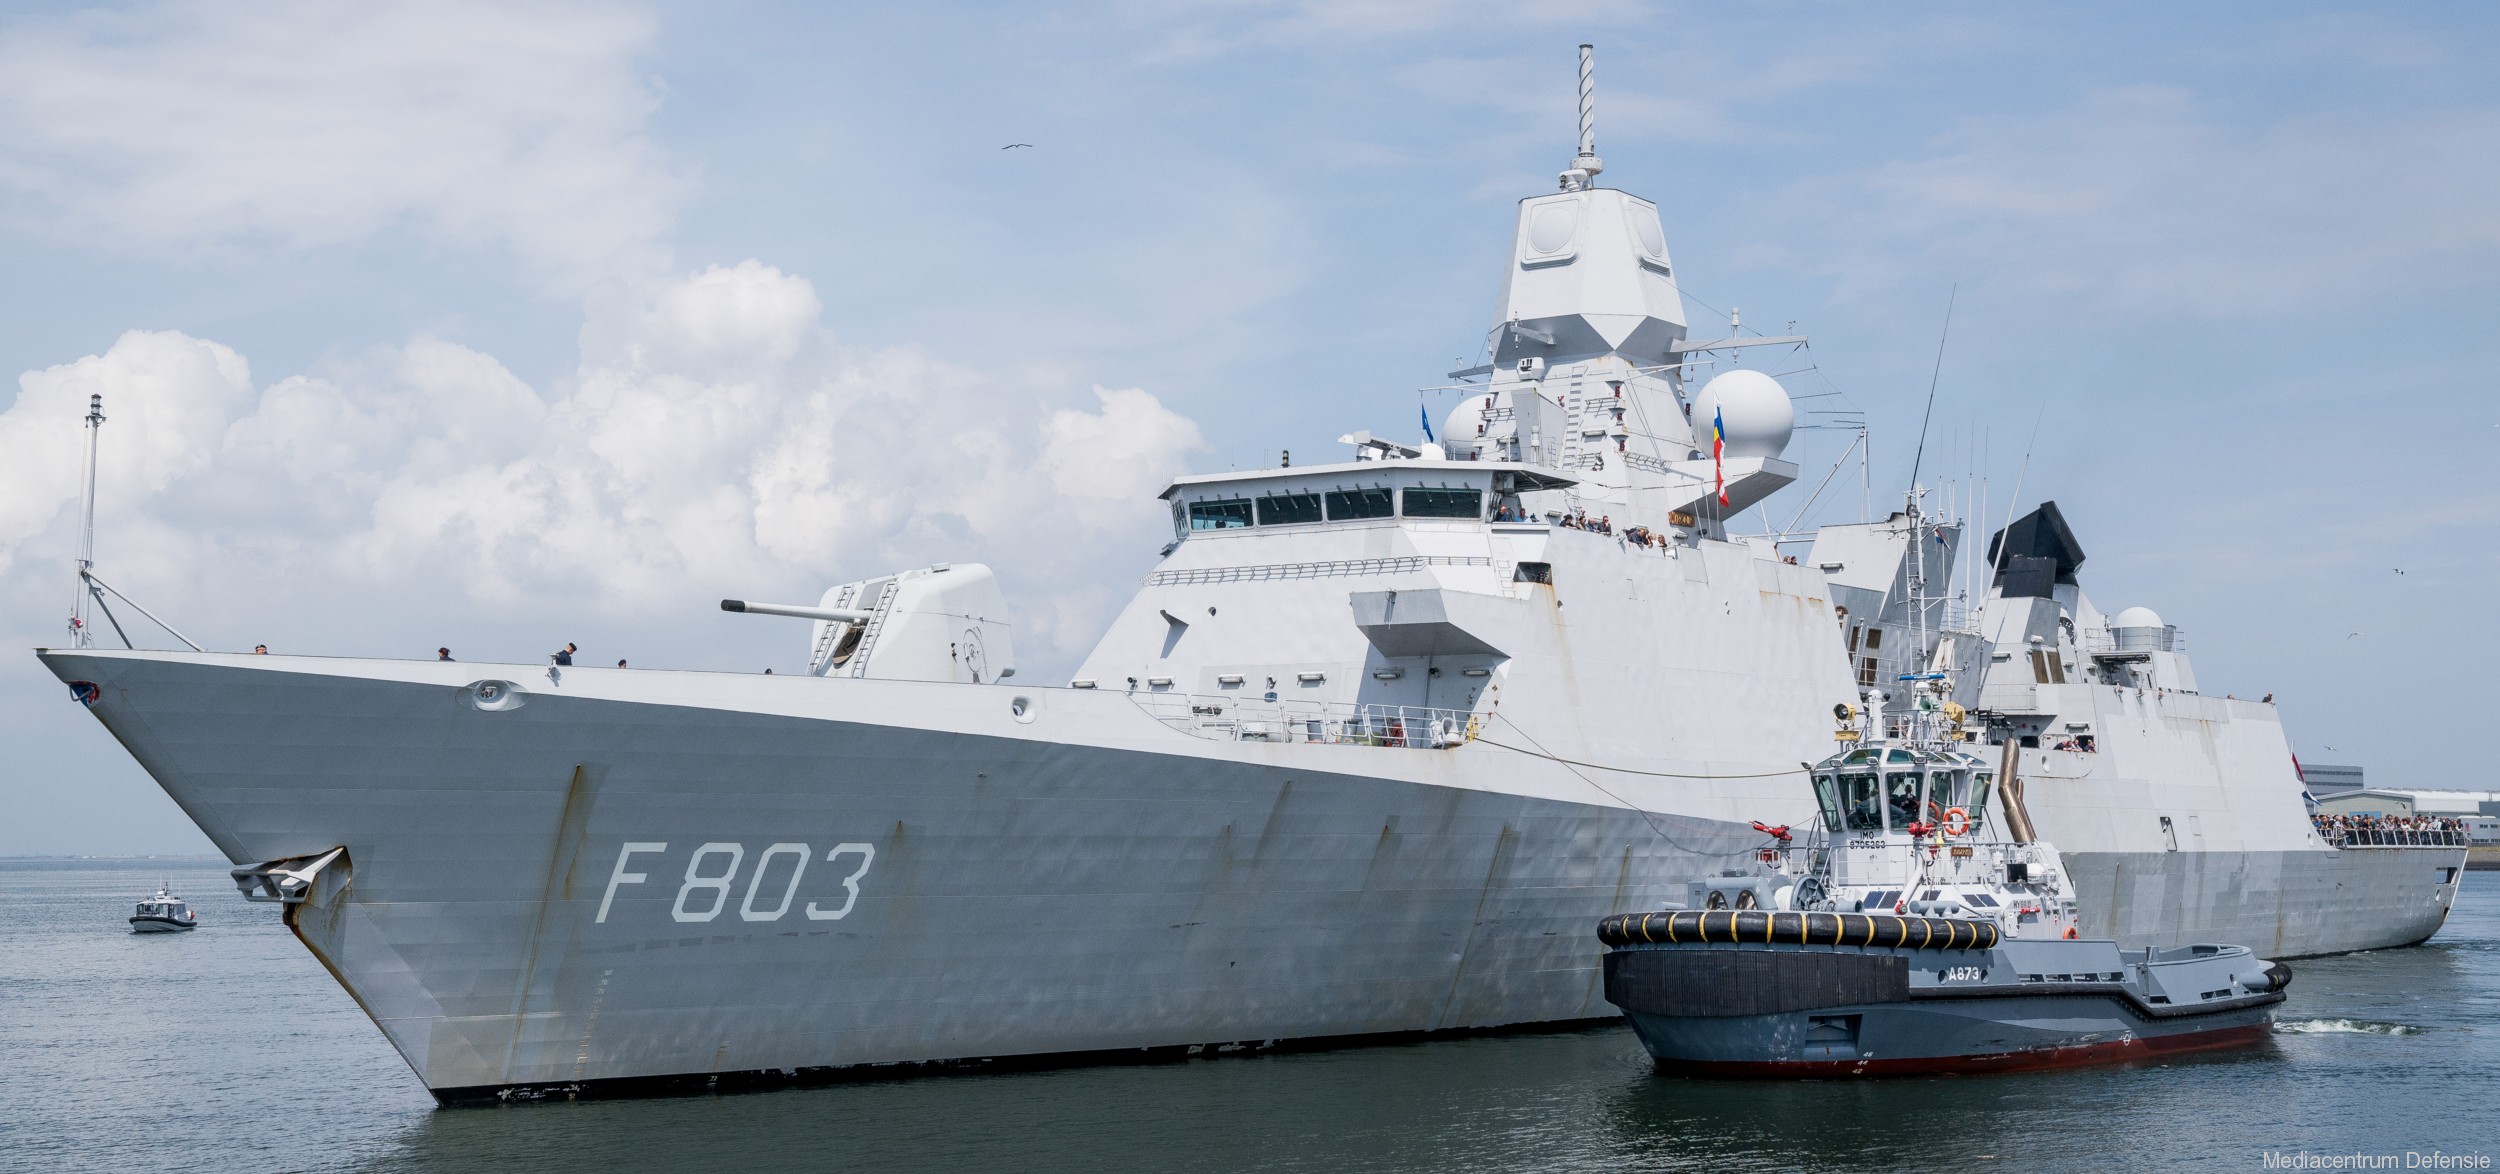 f-803 hnlms tromp guided missile frigate ffg air defense lcf royal netherlands navy 02 koninklijke marine